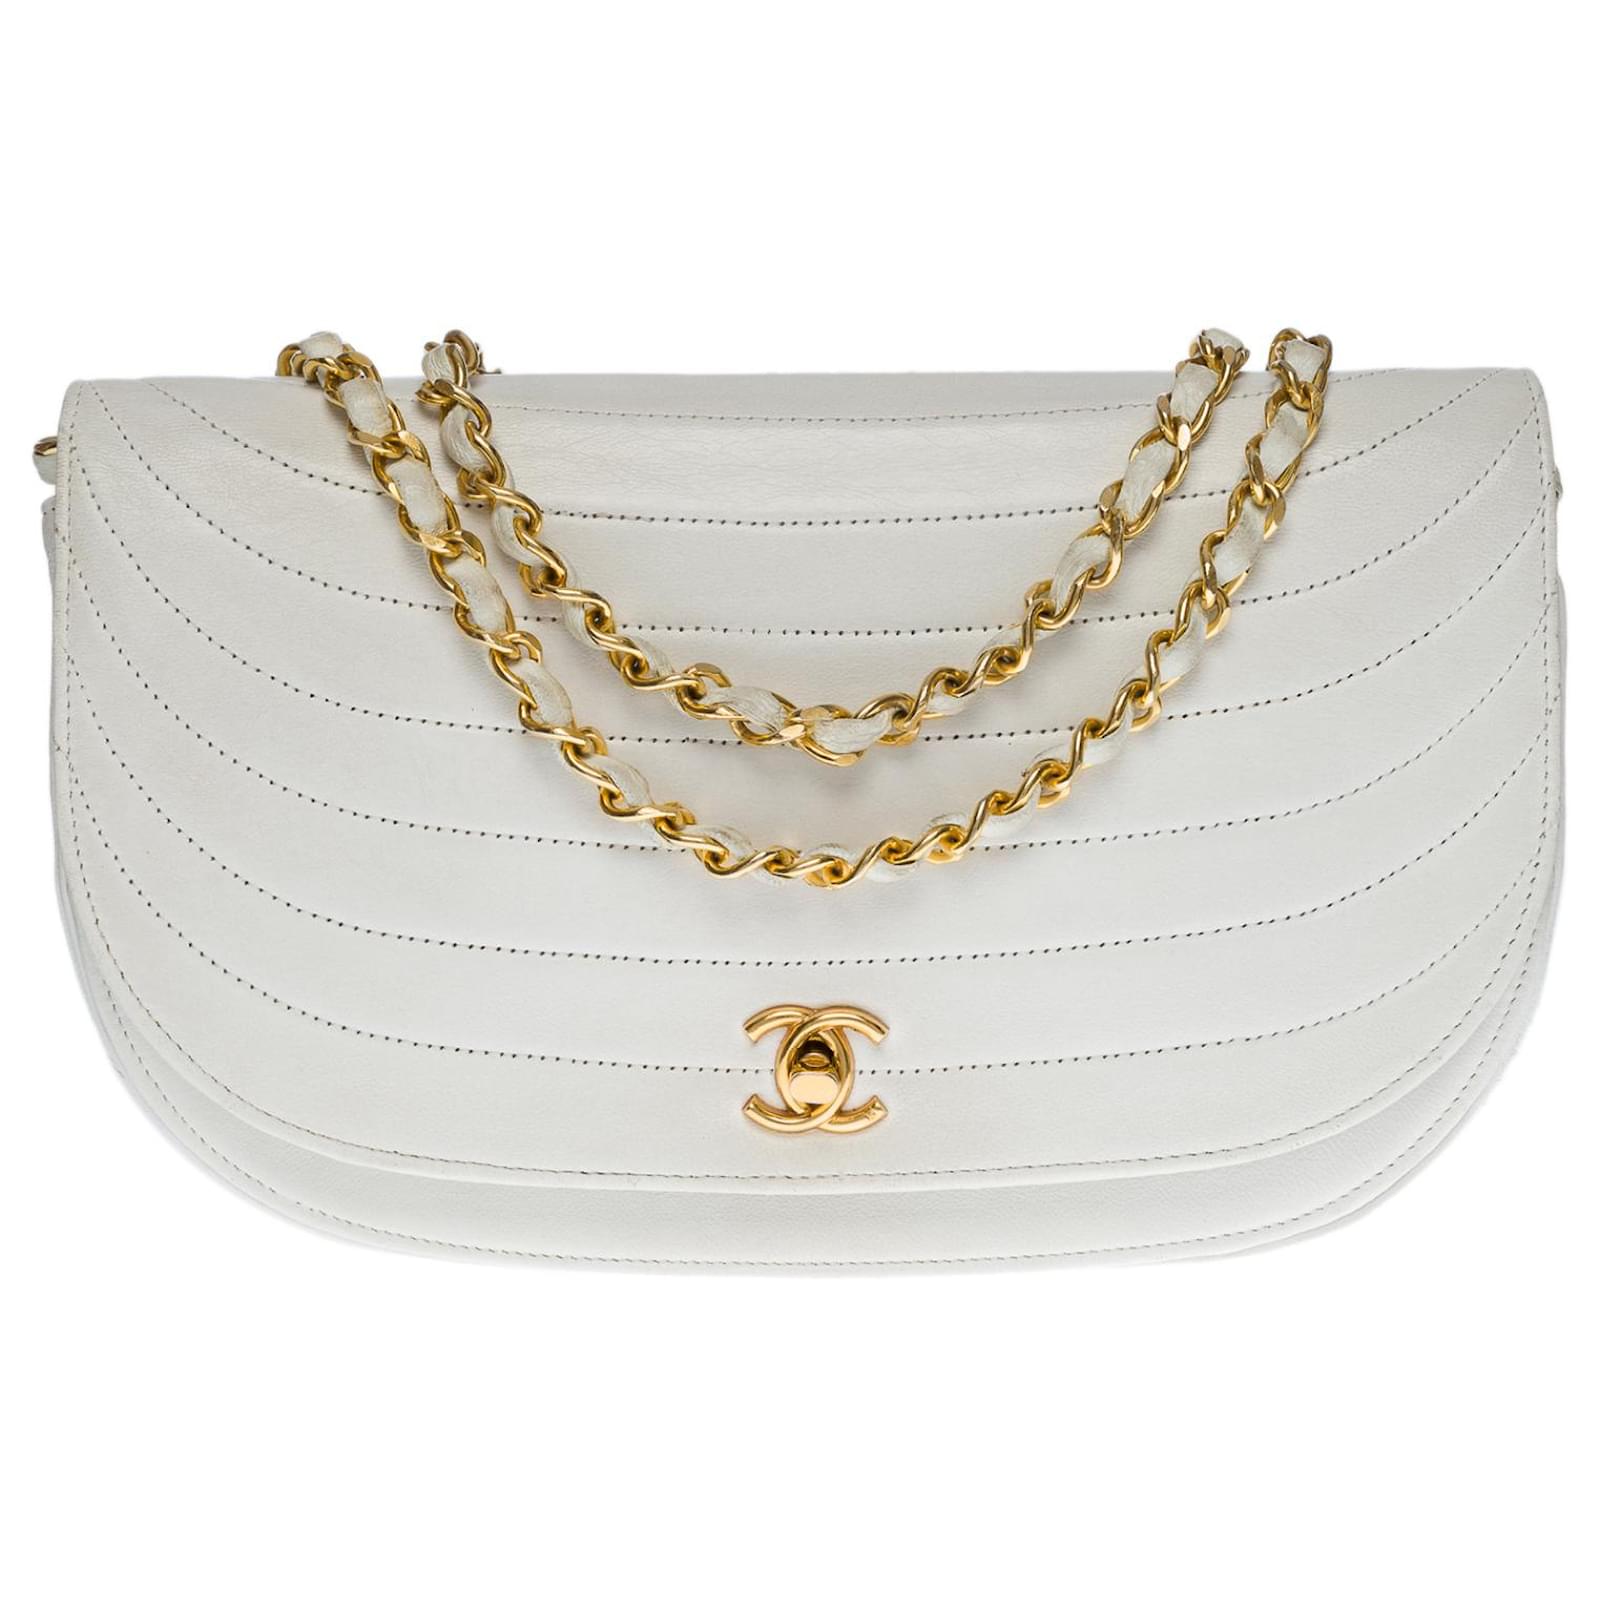 Timeless Very beautiful Chanel Classic half-moon flap bag handbag